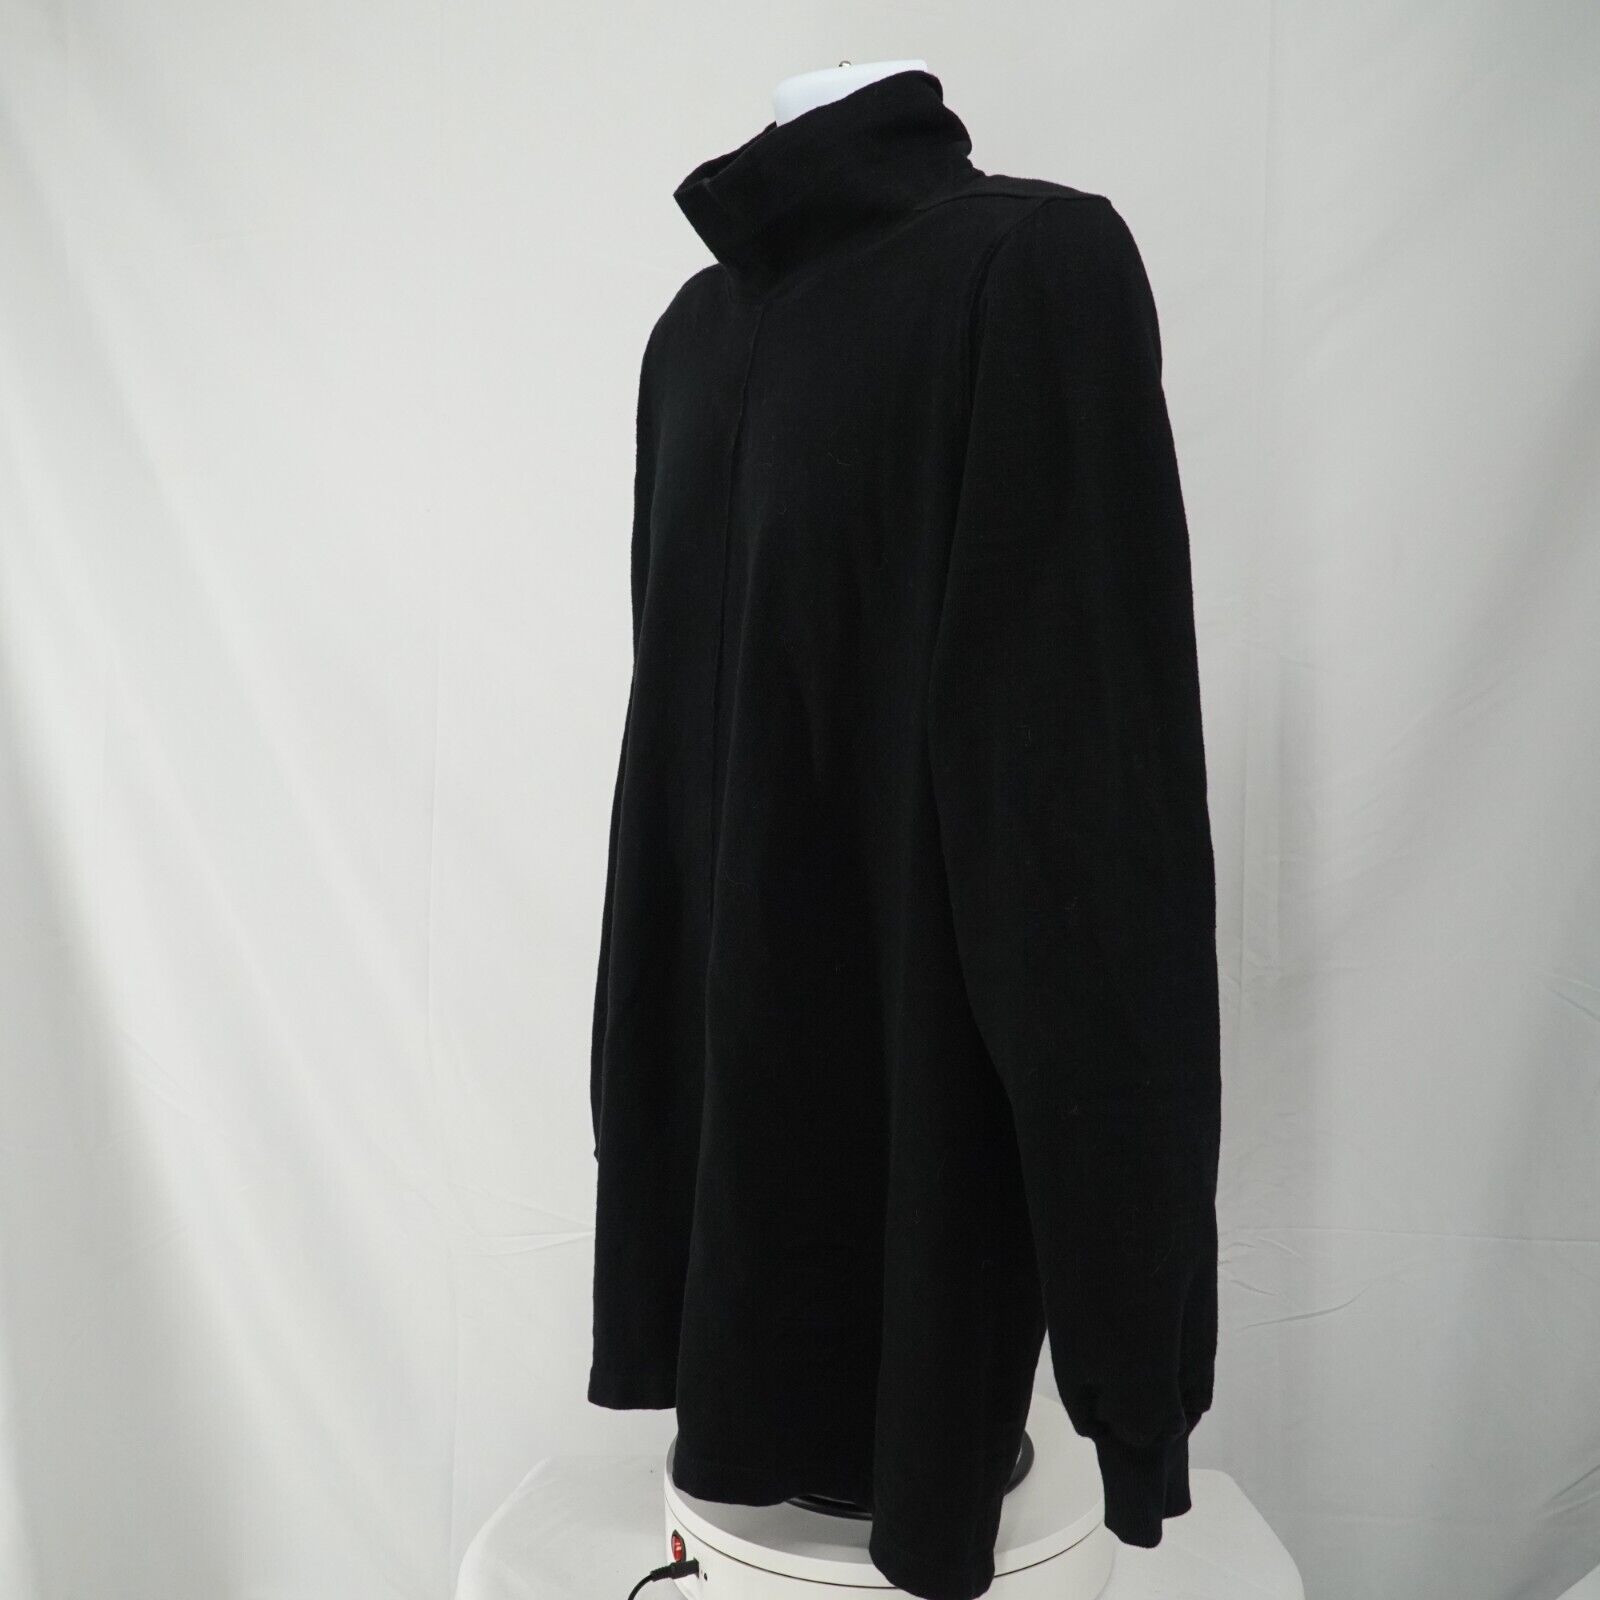 Rick Black Turtleneck Sweater Size Medium FW17 Glitter - 8